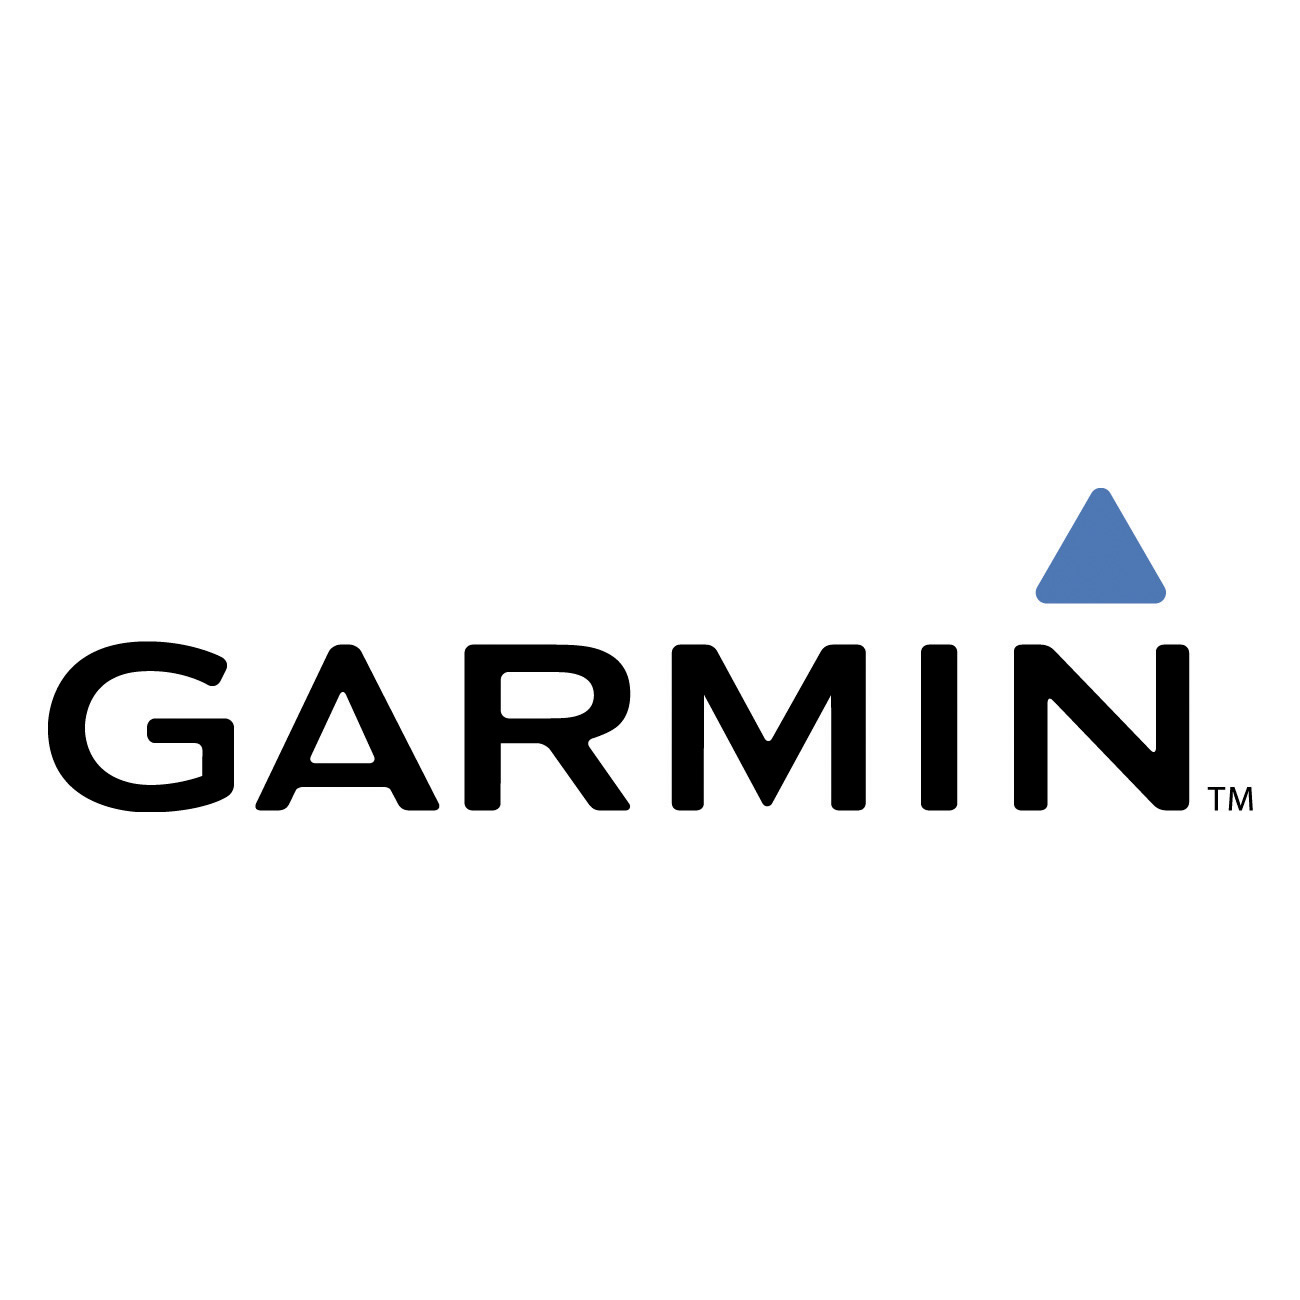 Garmin Logo Wallpaper